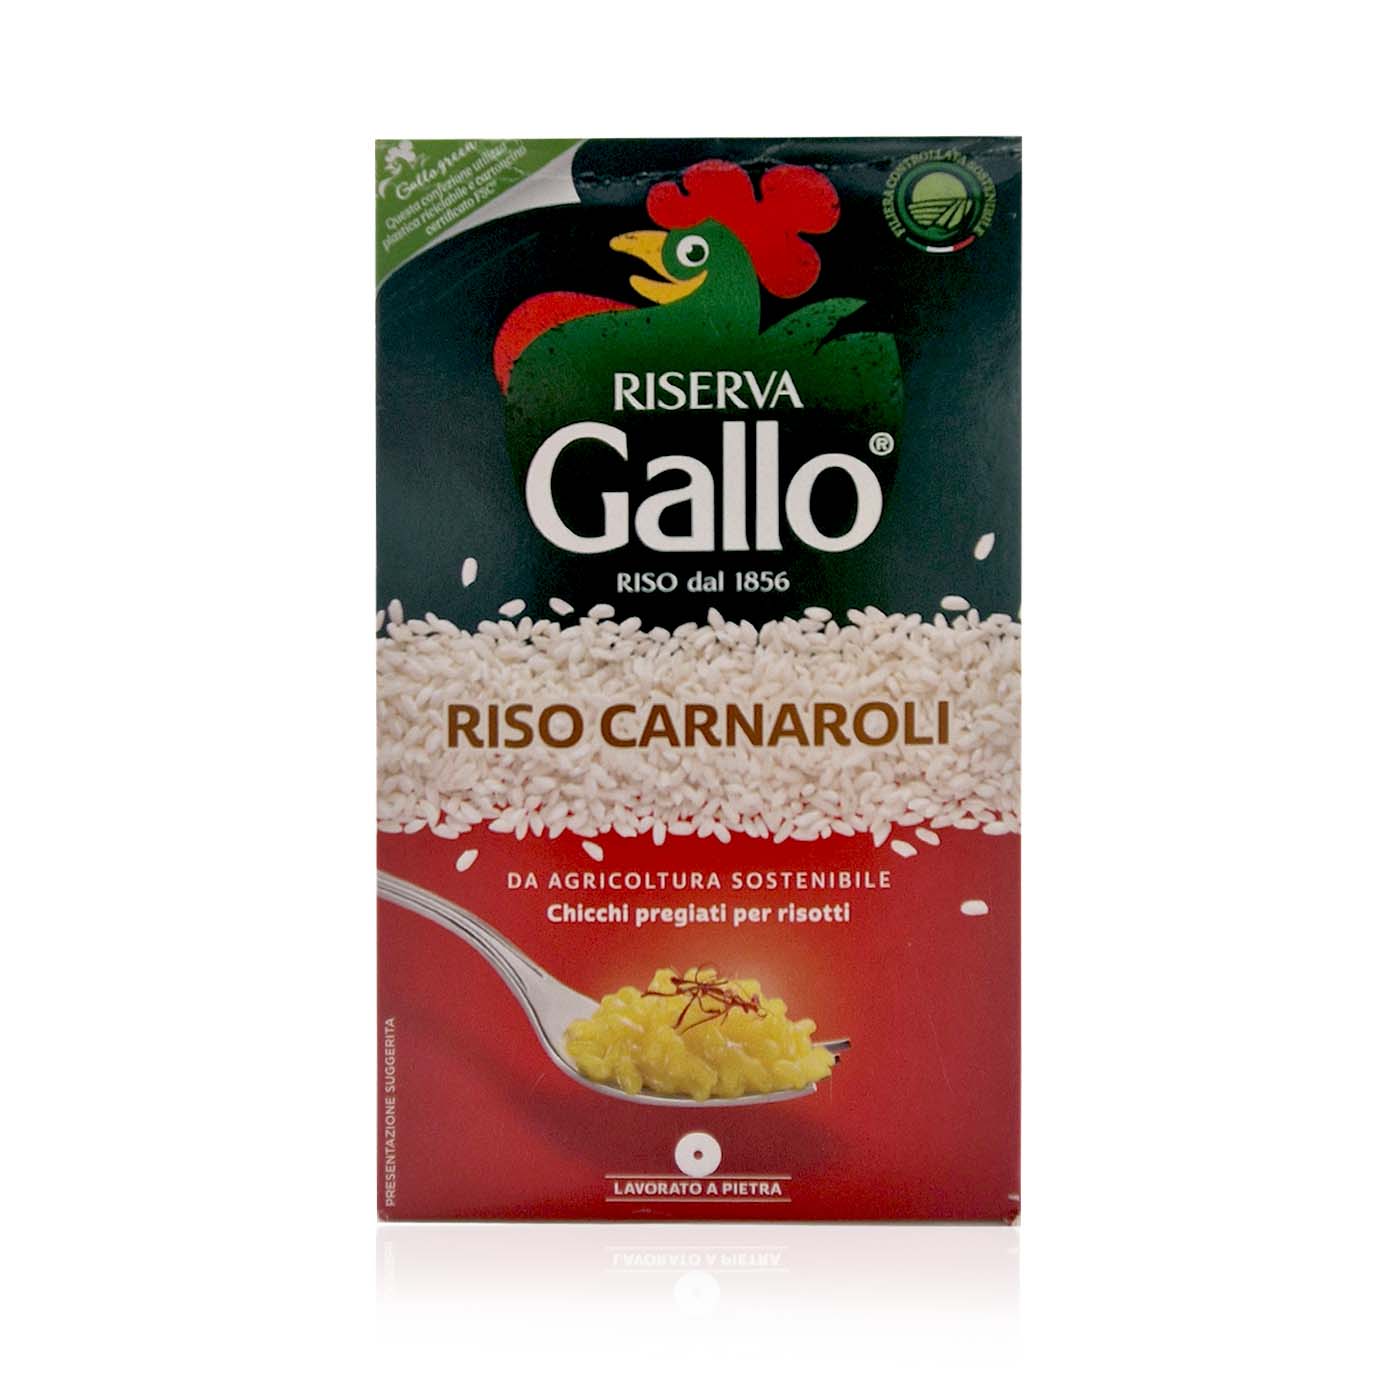 Riserva Gallo - Riso Carnaroli - Reis - 1kg